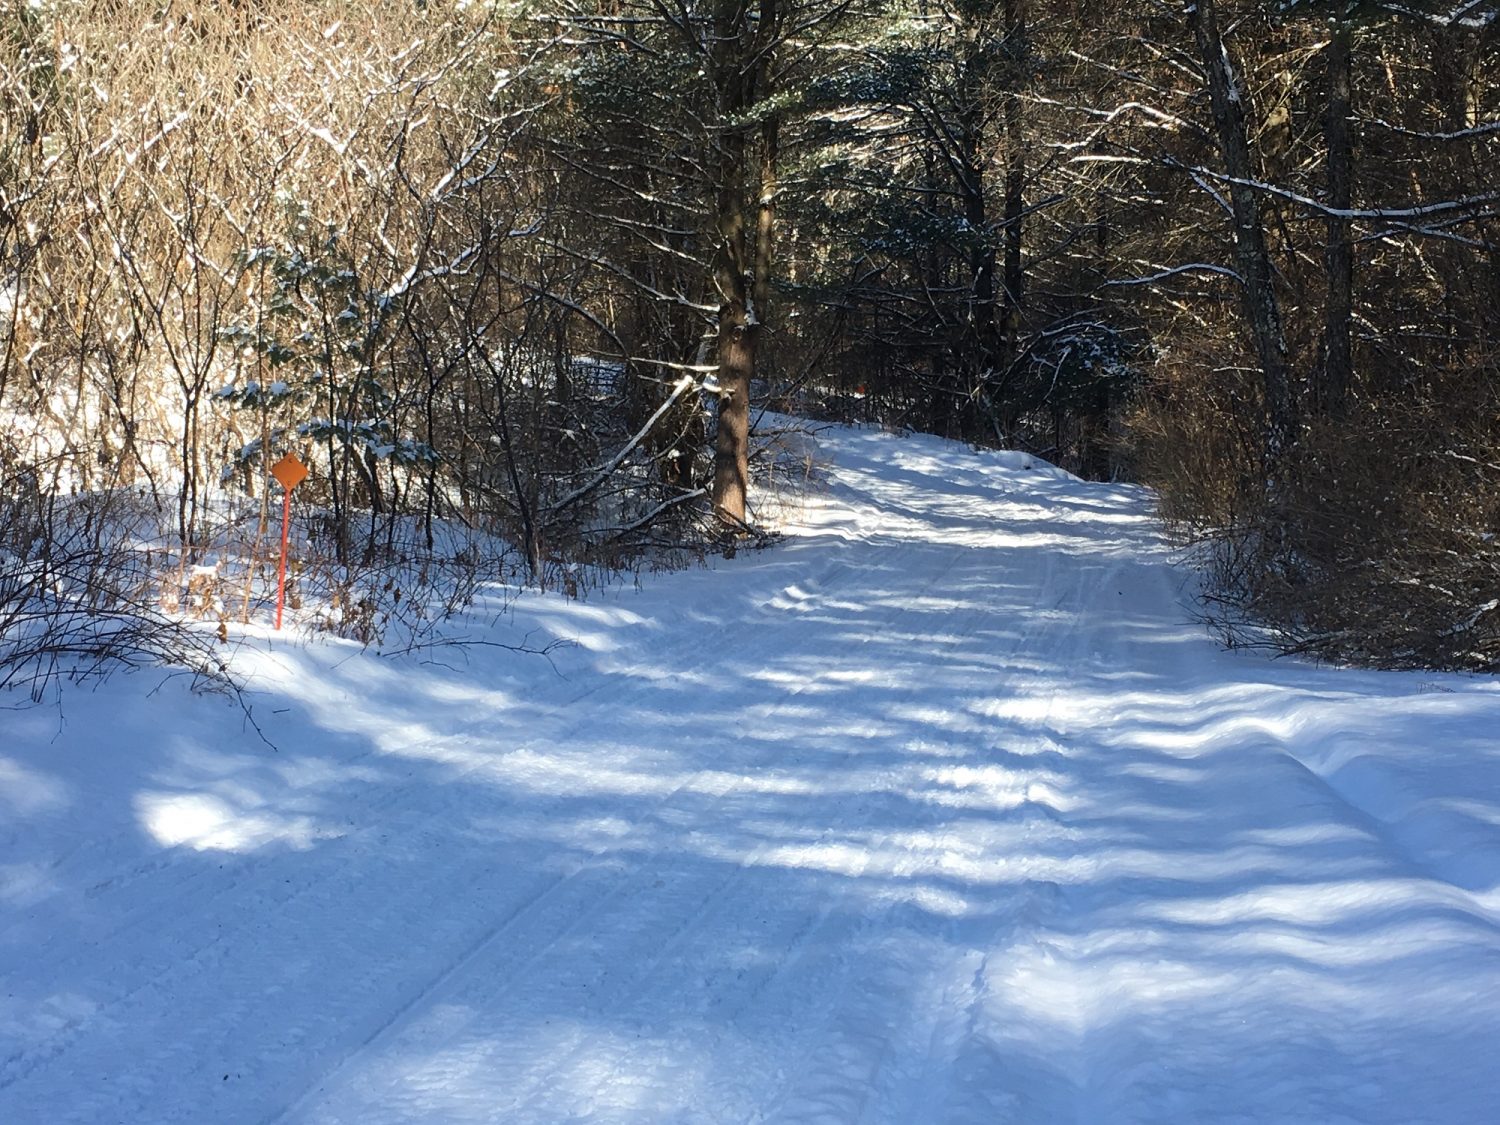 Lincoln County snowmobile trails to close